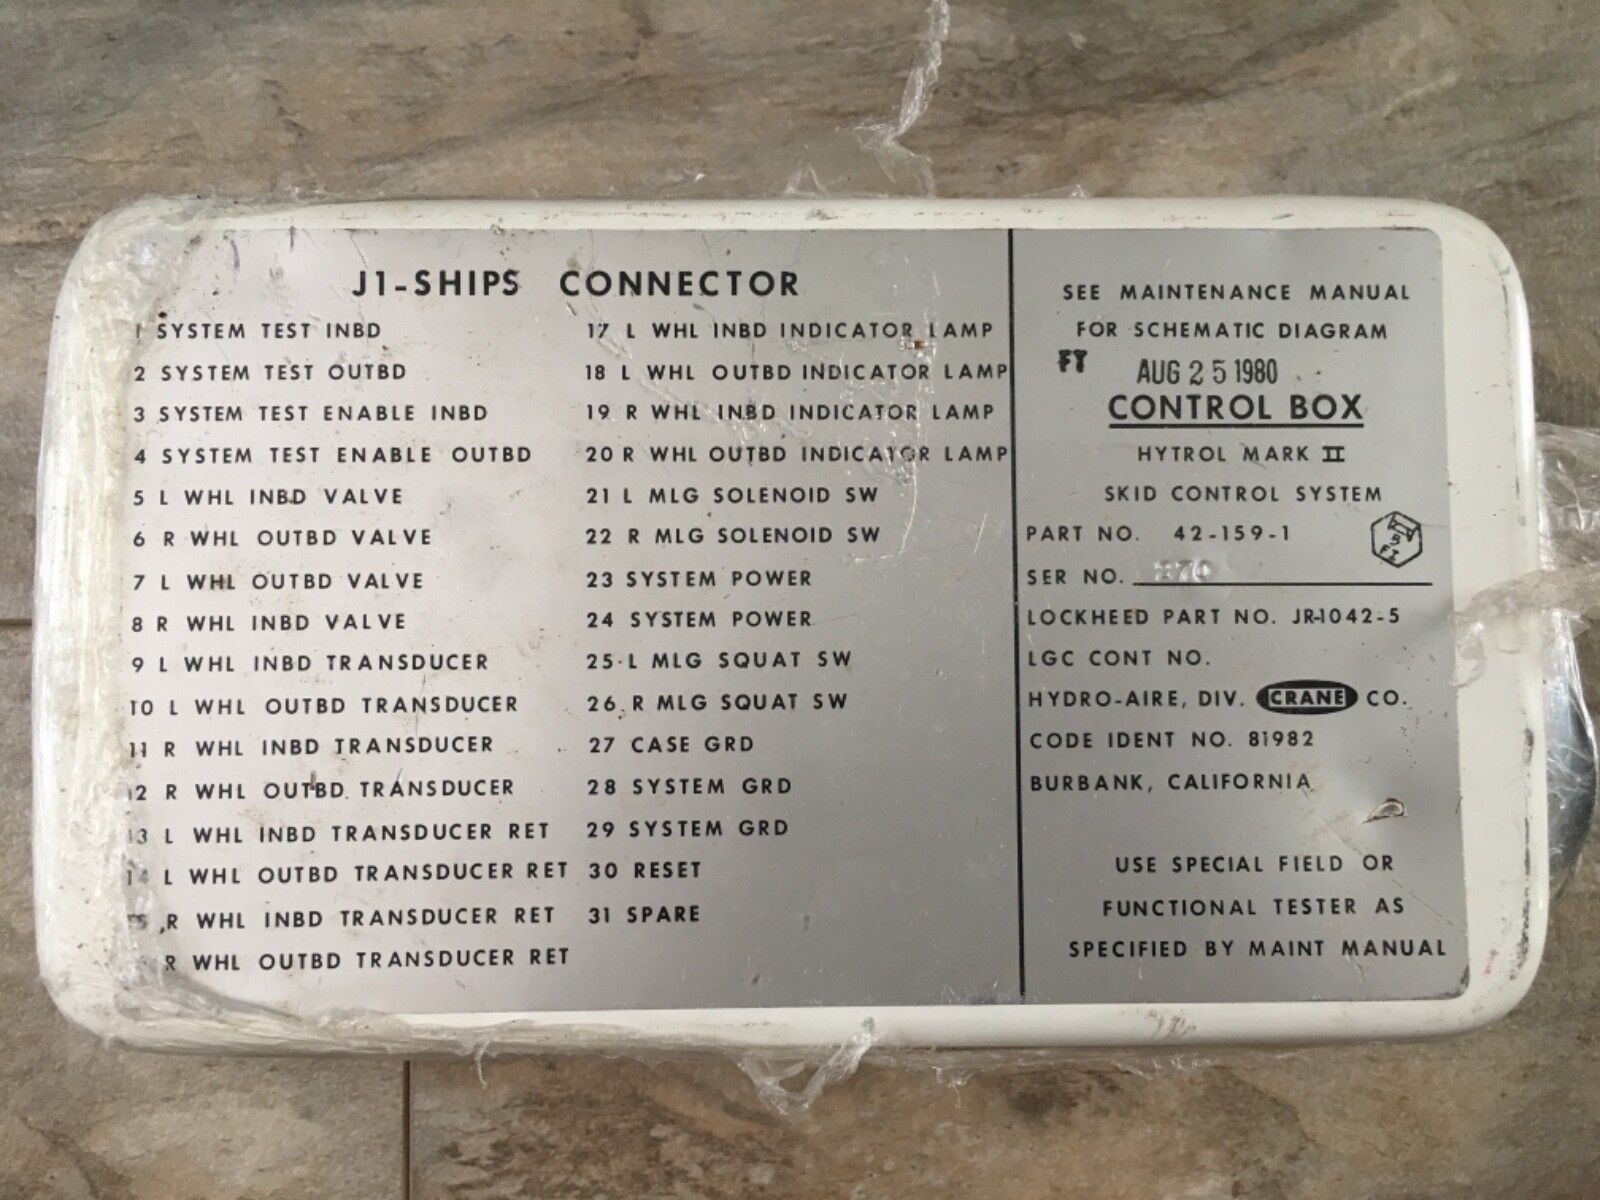 Skid Control Box 42-159-1